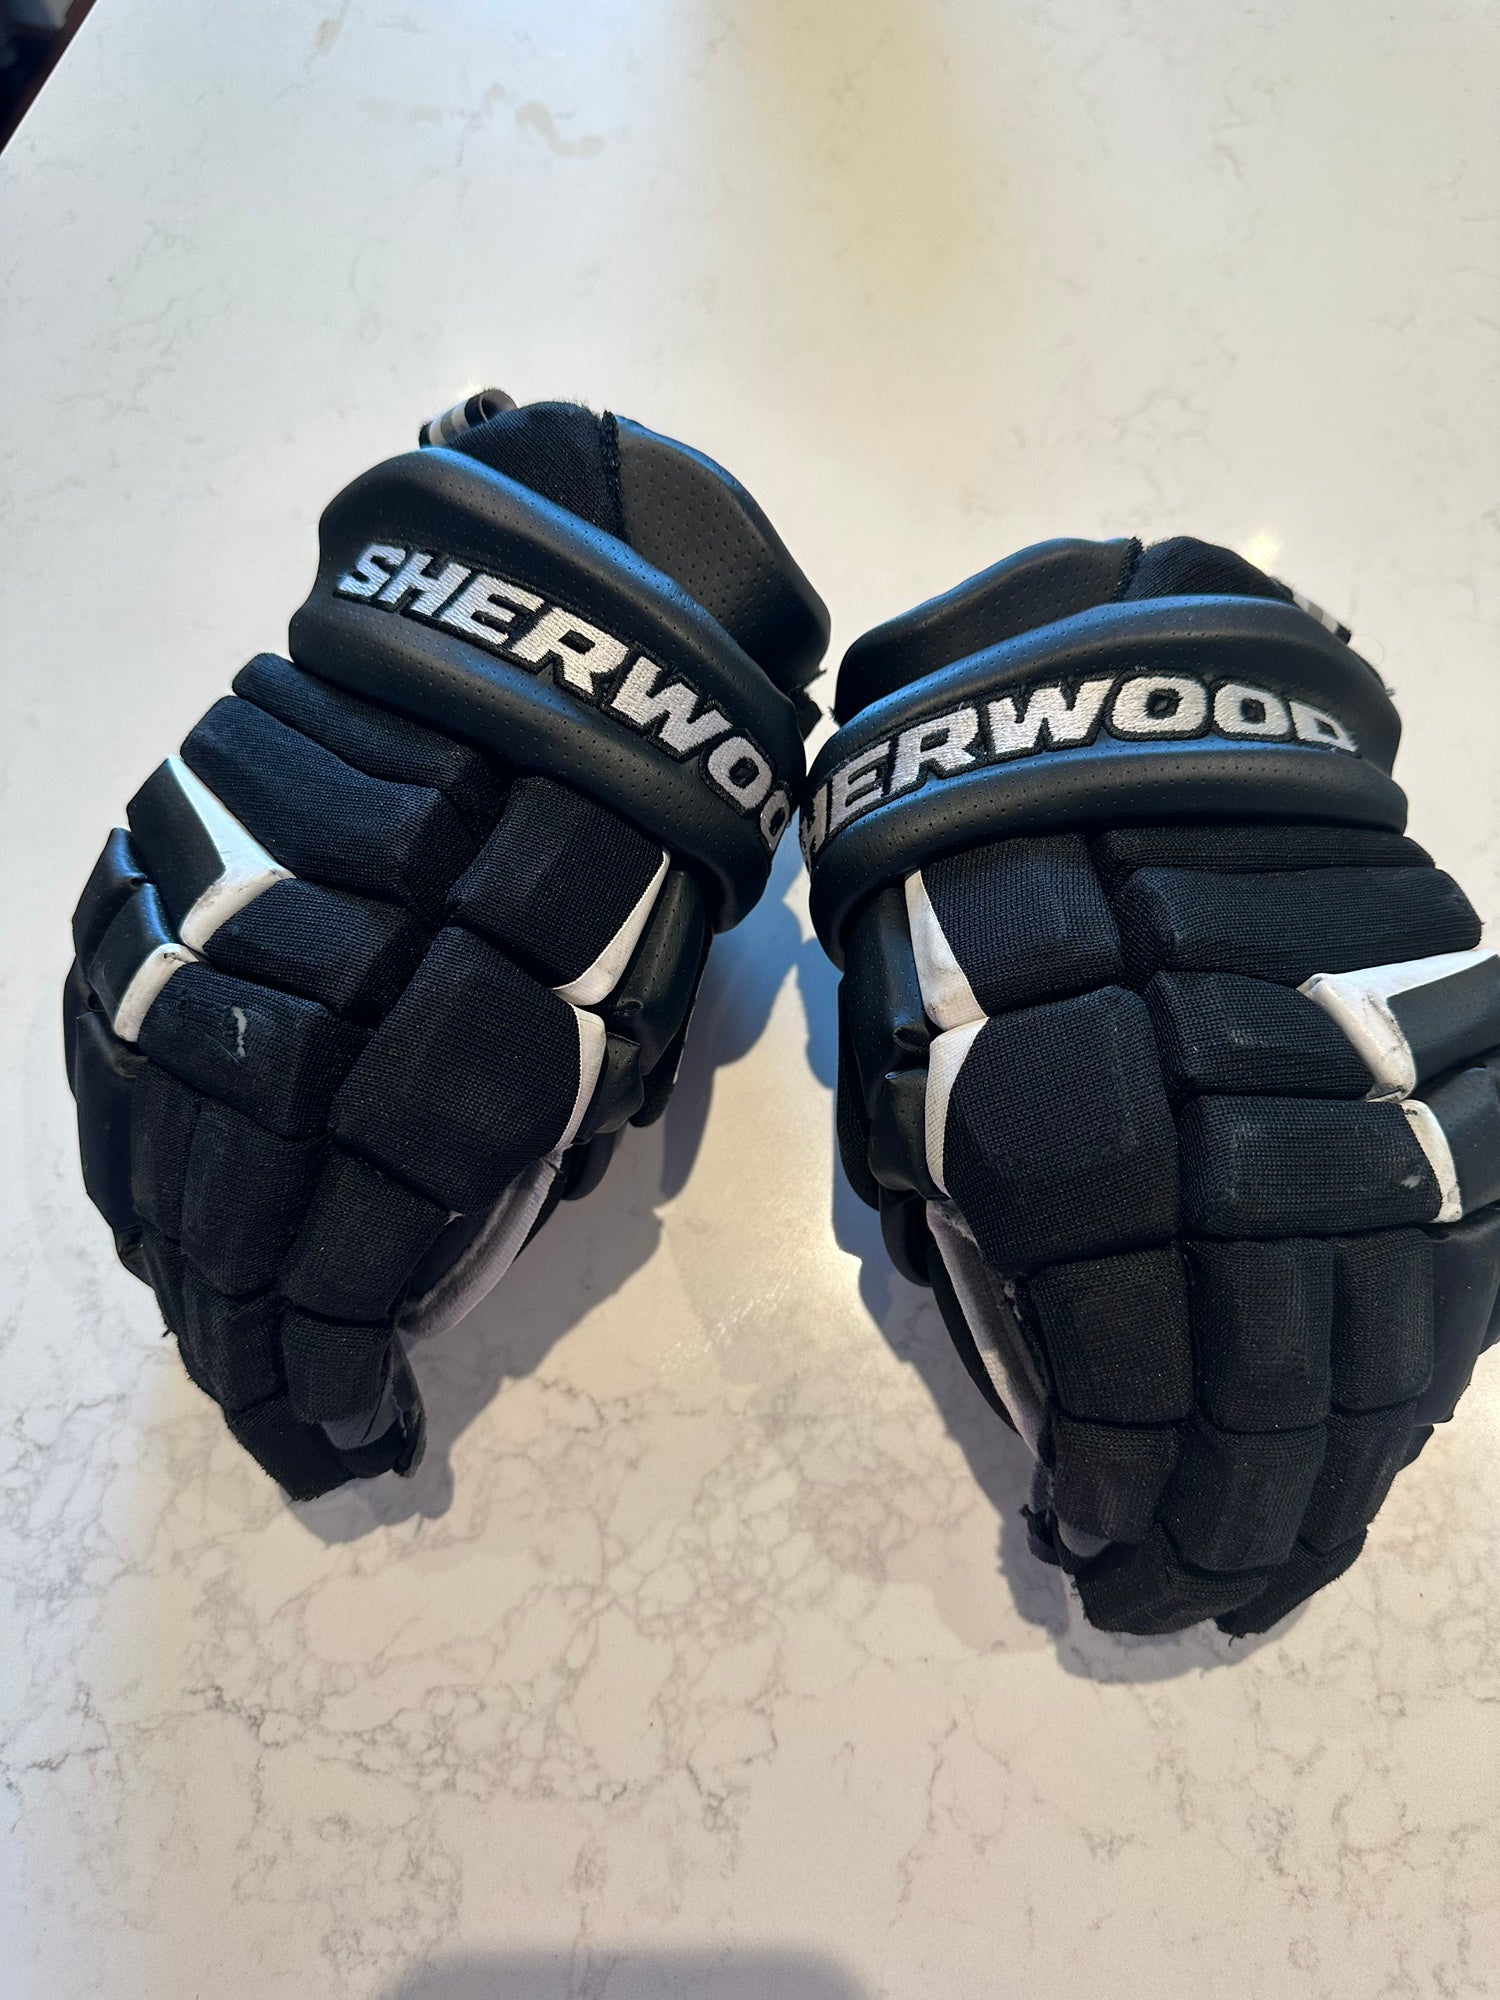 Sherwood Rekker Legend Pro - NHL Pro Stock Glove - New York Rangers (R –  HockeyStickMan